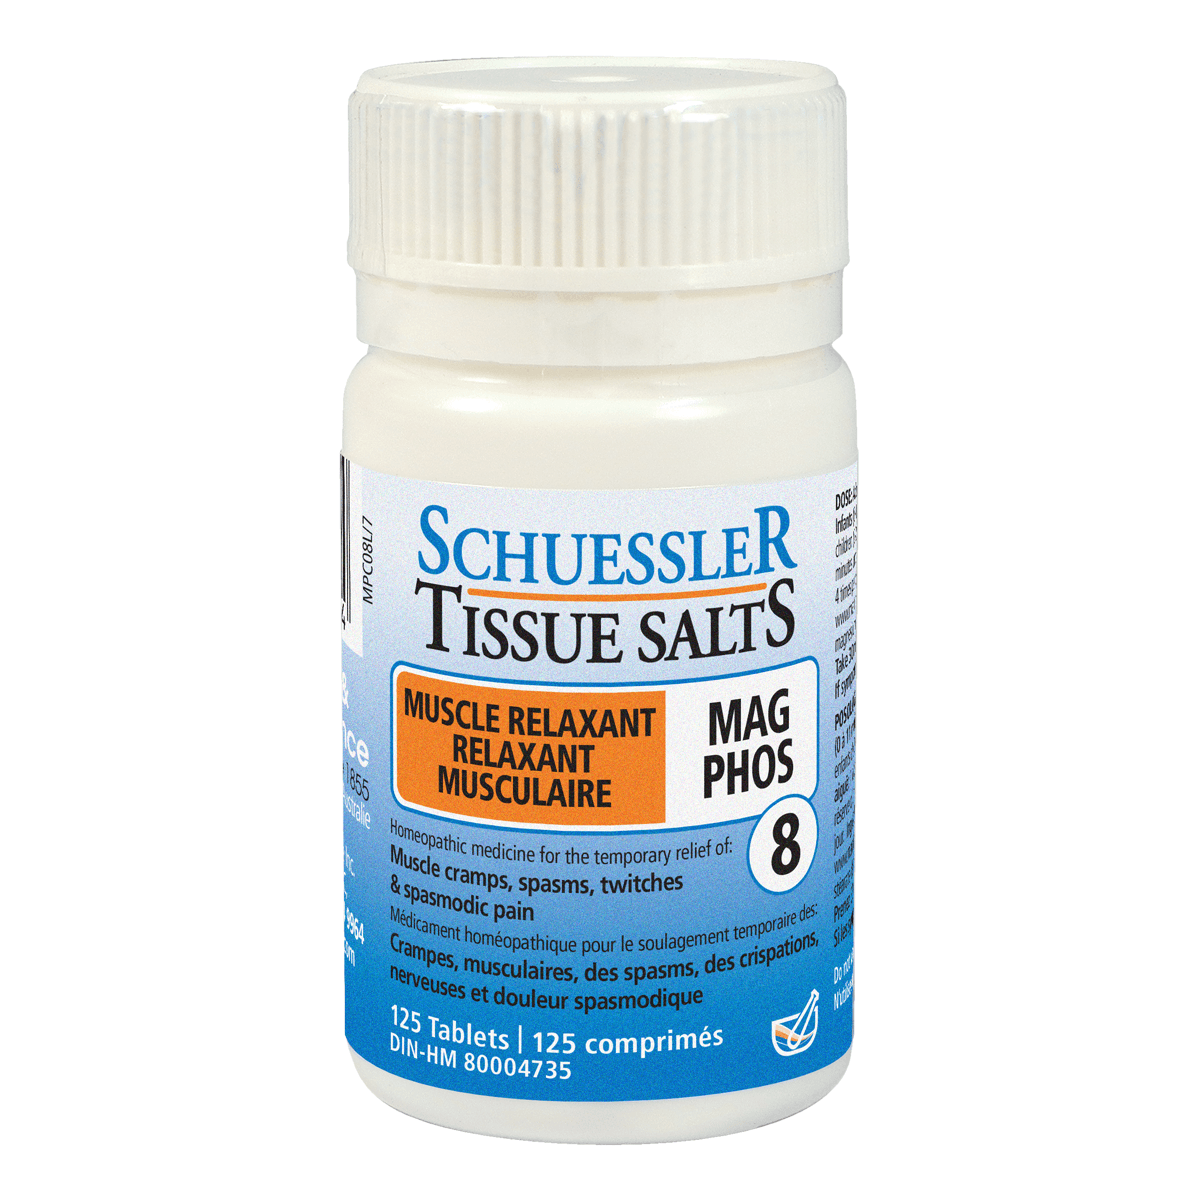 Schuessler Tissue Salts Products Online